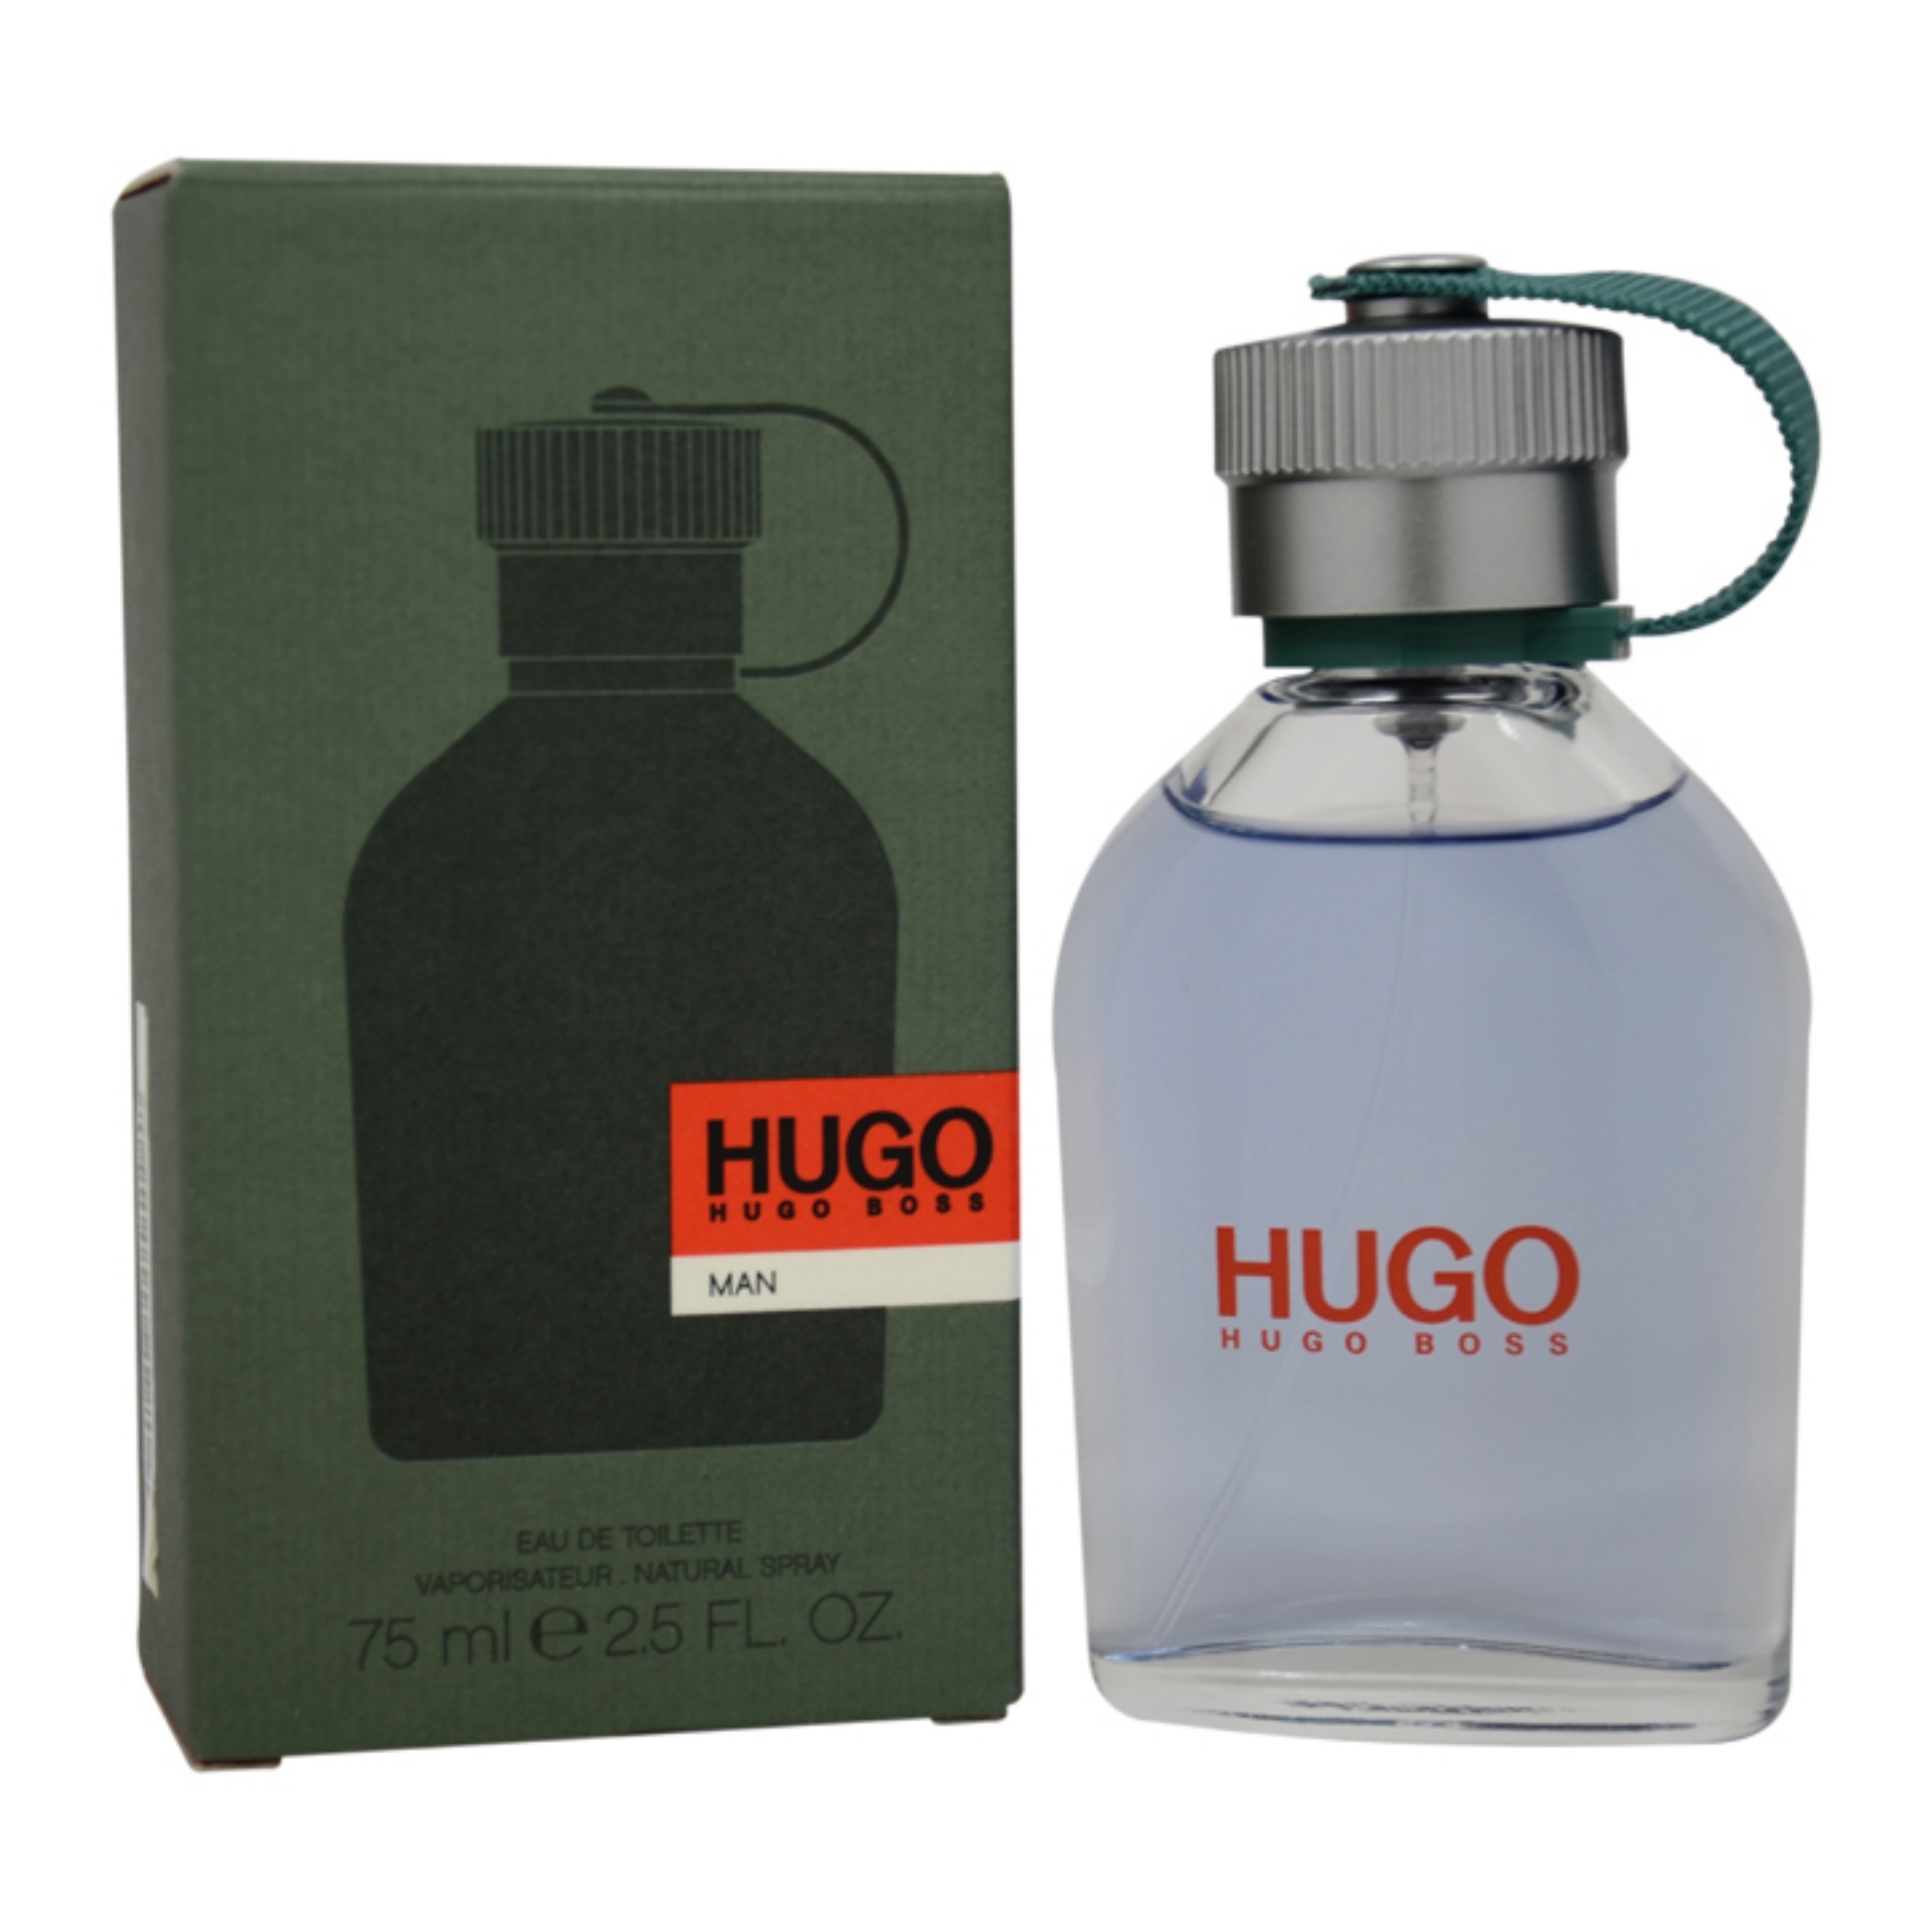 Хьюго босс летуаль. Hugo Boss 75ml. Hugo Boss мужские. Хьюго босс Хьюго мен. Hugo Boss Hugo man extreme.